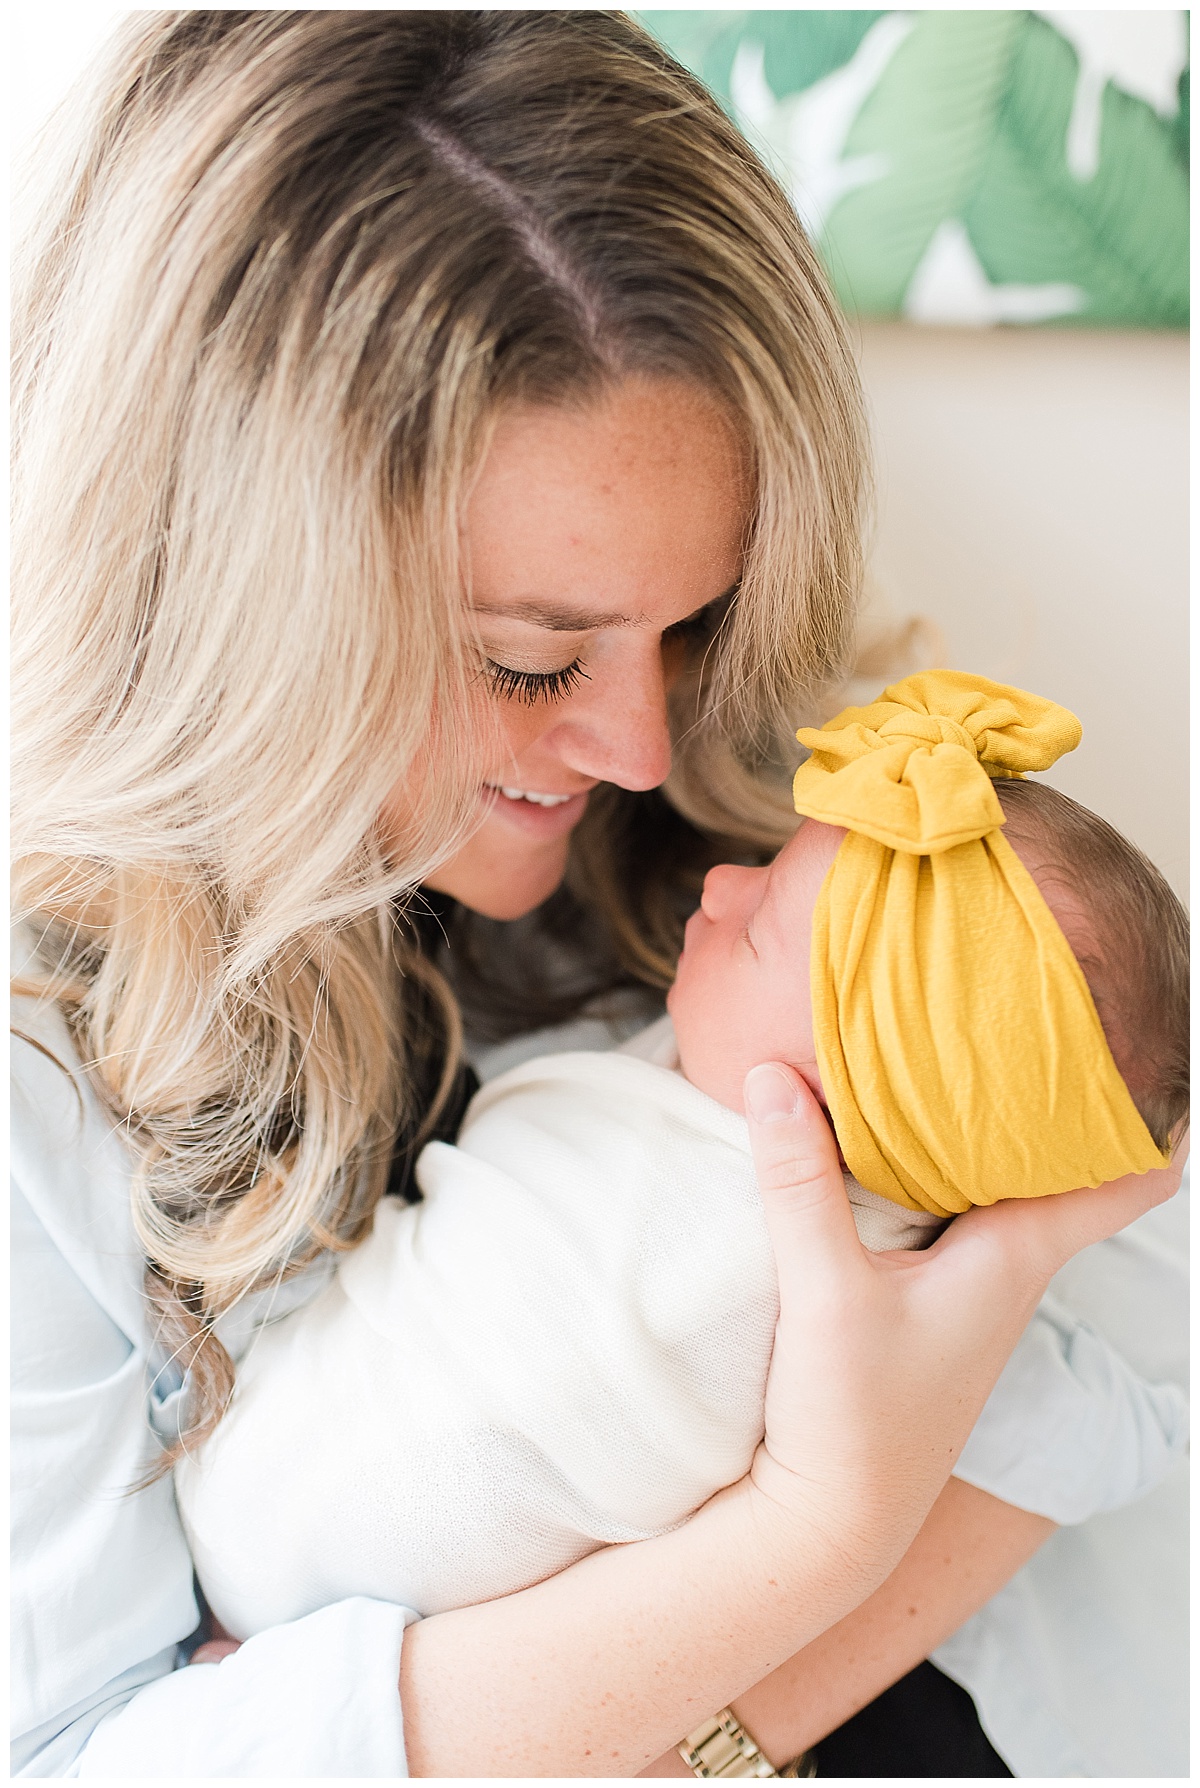 Newborn Photography, Newborn Session, Newborn Photos, Tropical Nursery, Newborn Baby, Baby Girl, Prince George Photographer, Caiti Garter Photography